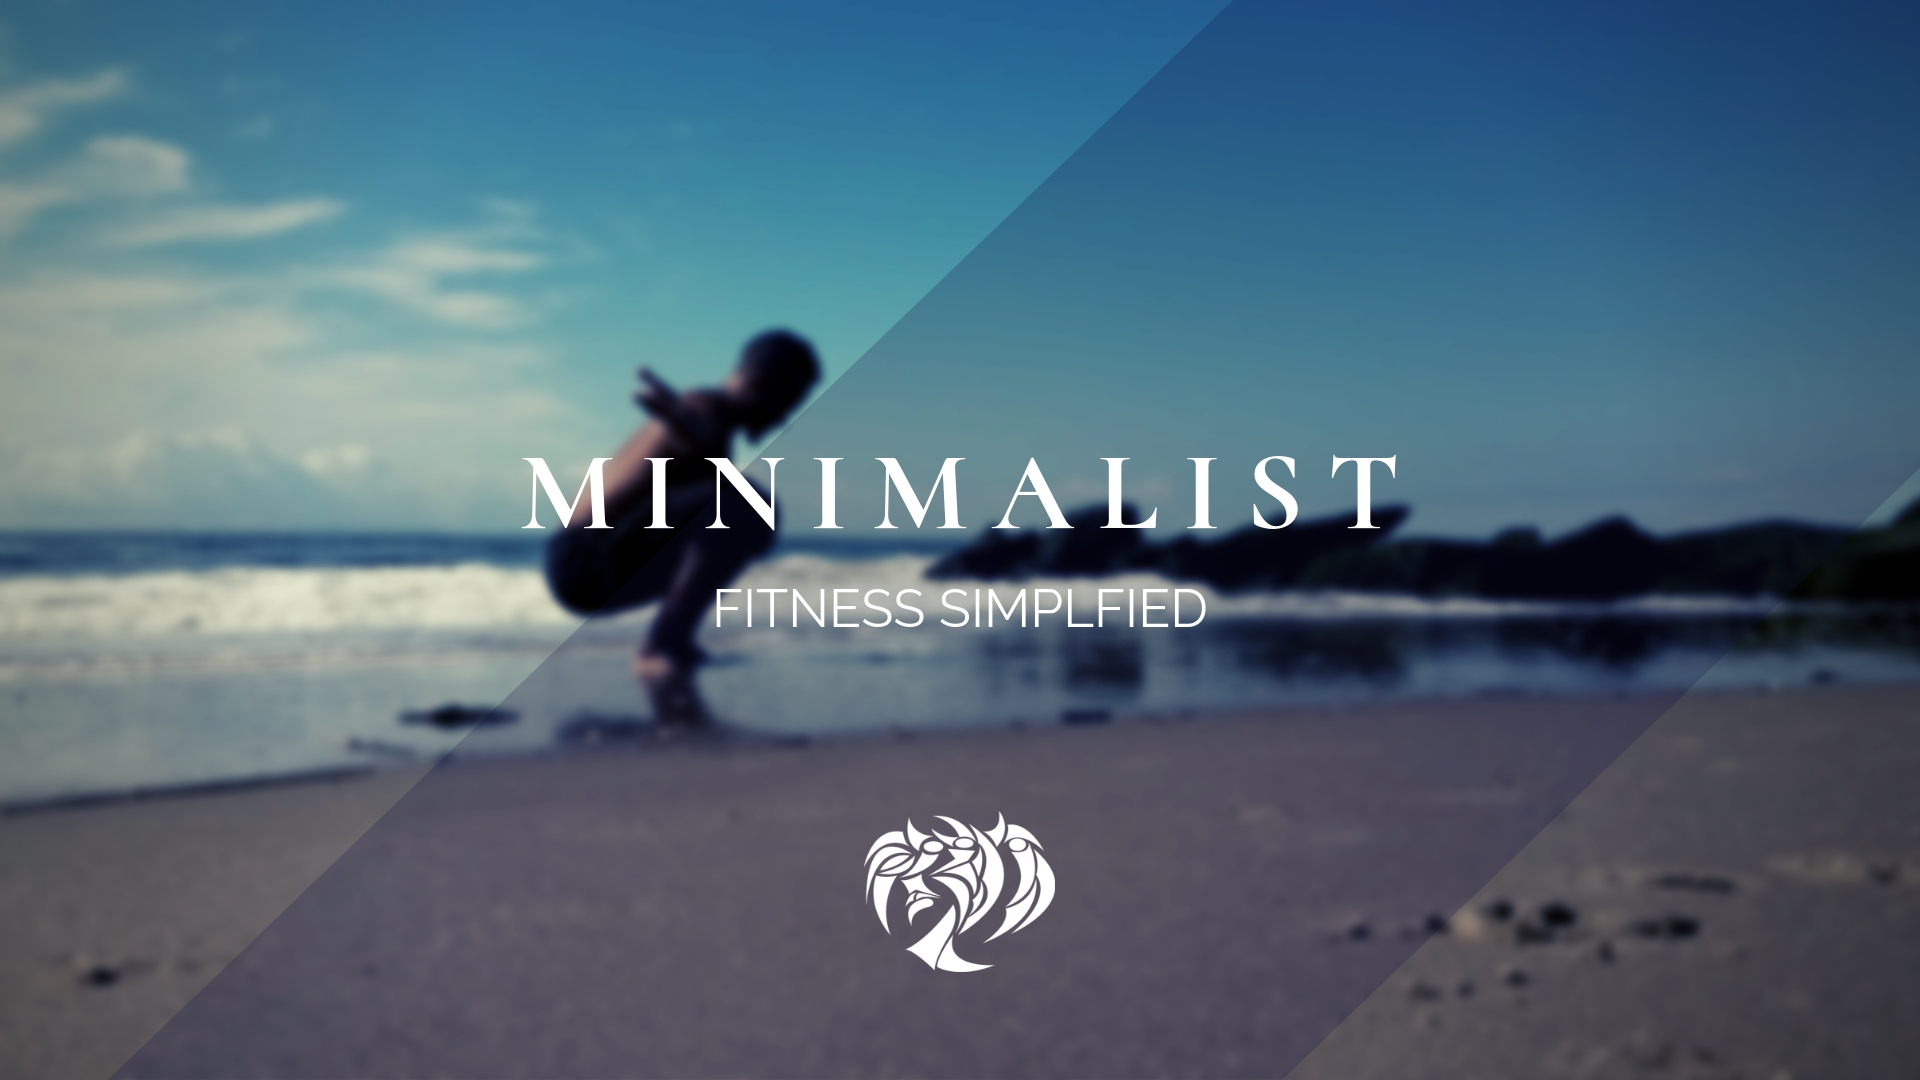 minimalist style definition